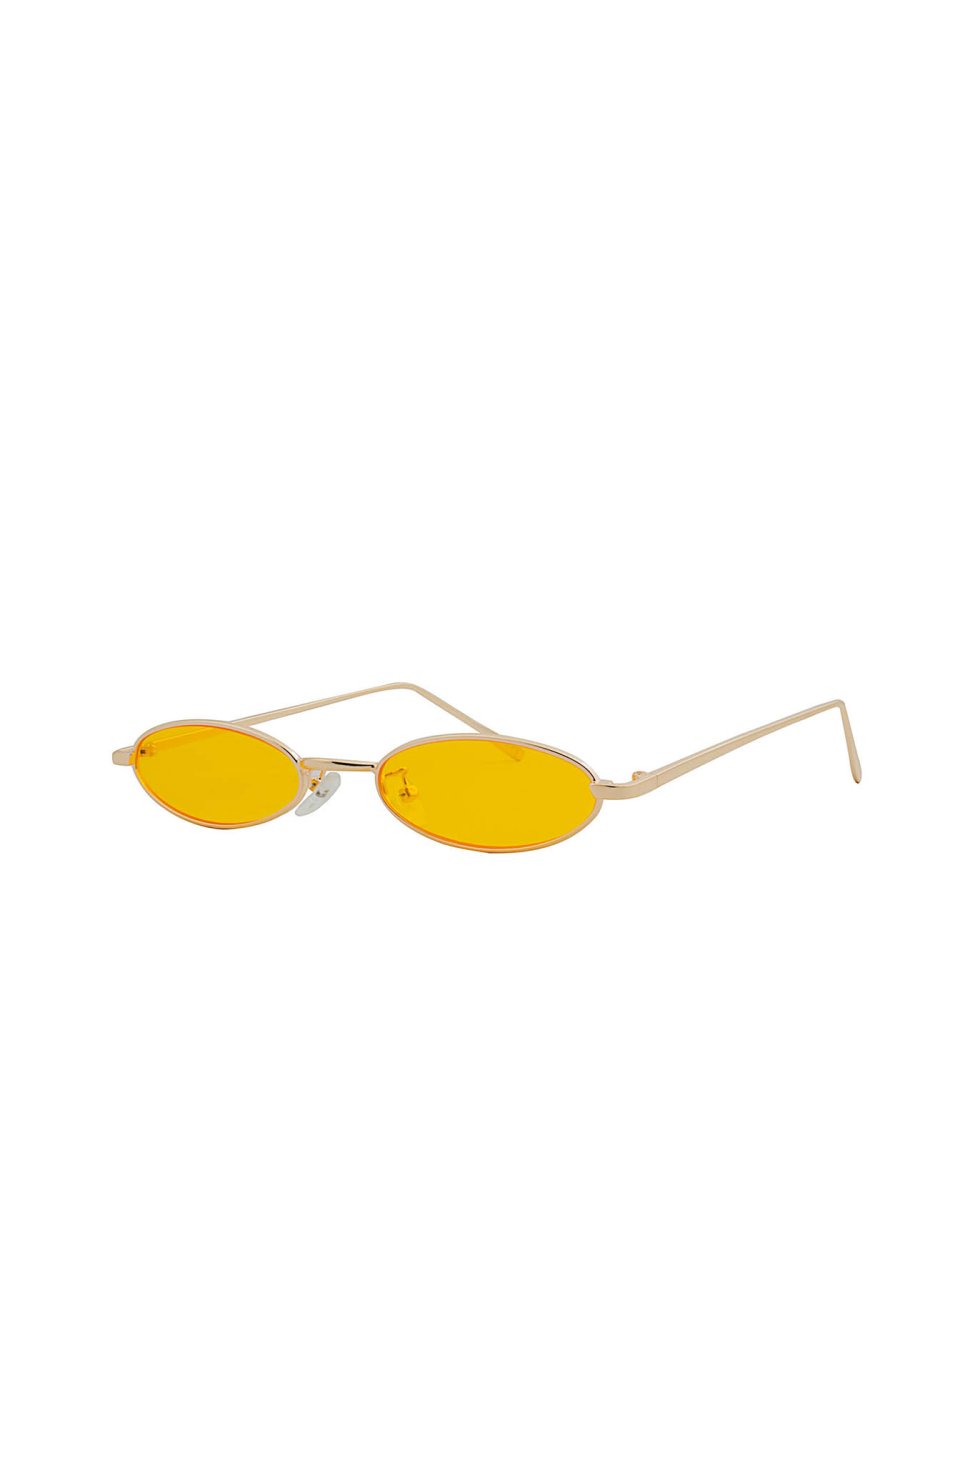 Media γυαλιά ηλίου χρυσός σκελετός κίτρινος φακός